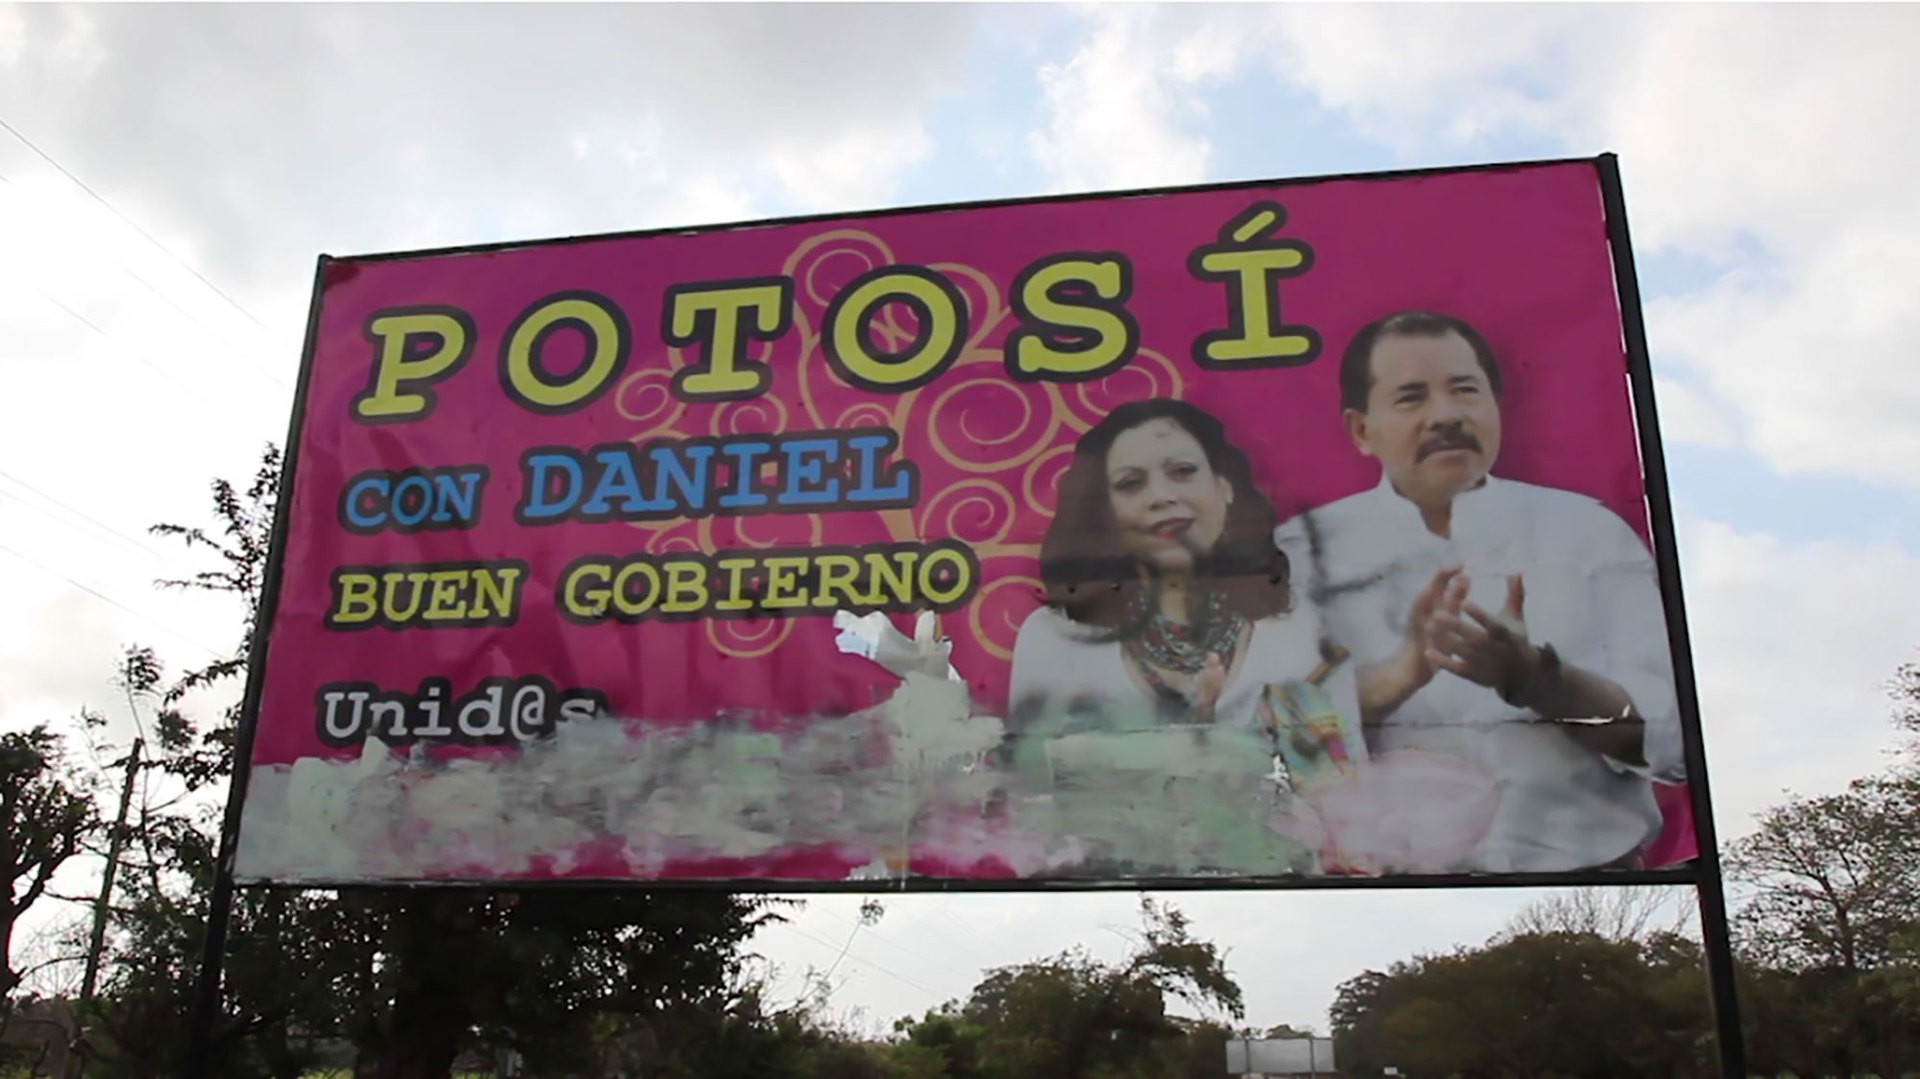 A billboard promotes President Daniel Ortega. (Photo by Erica Lang)